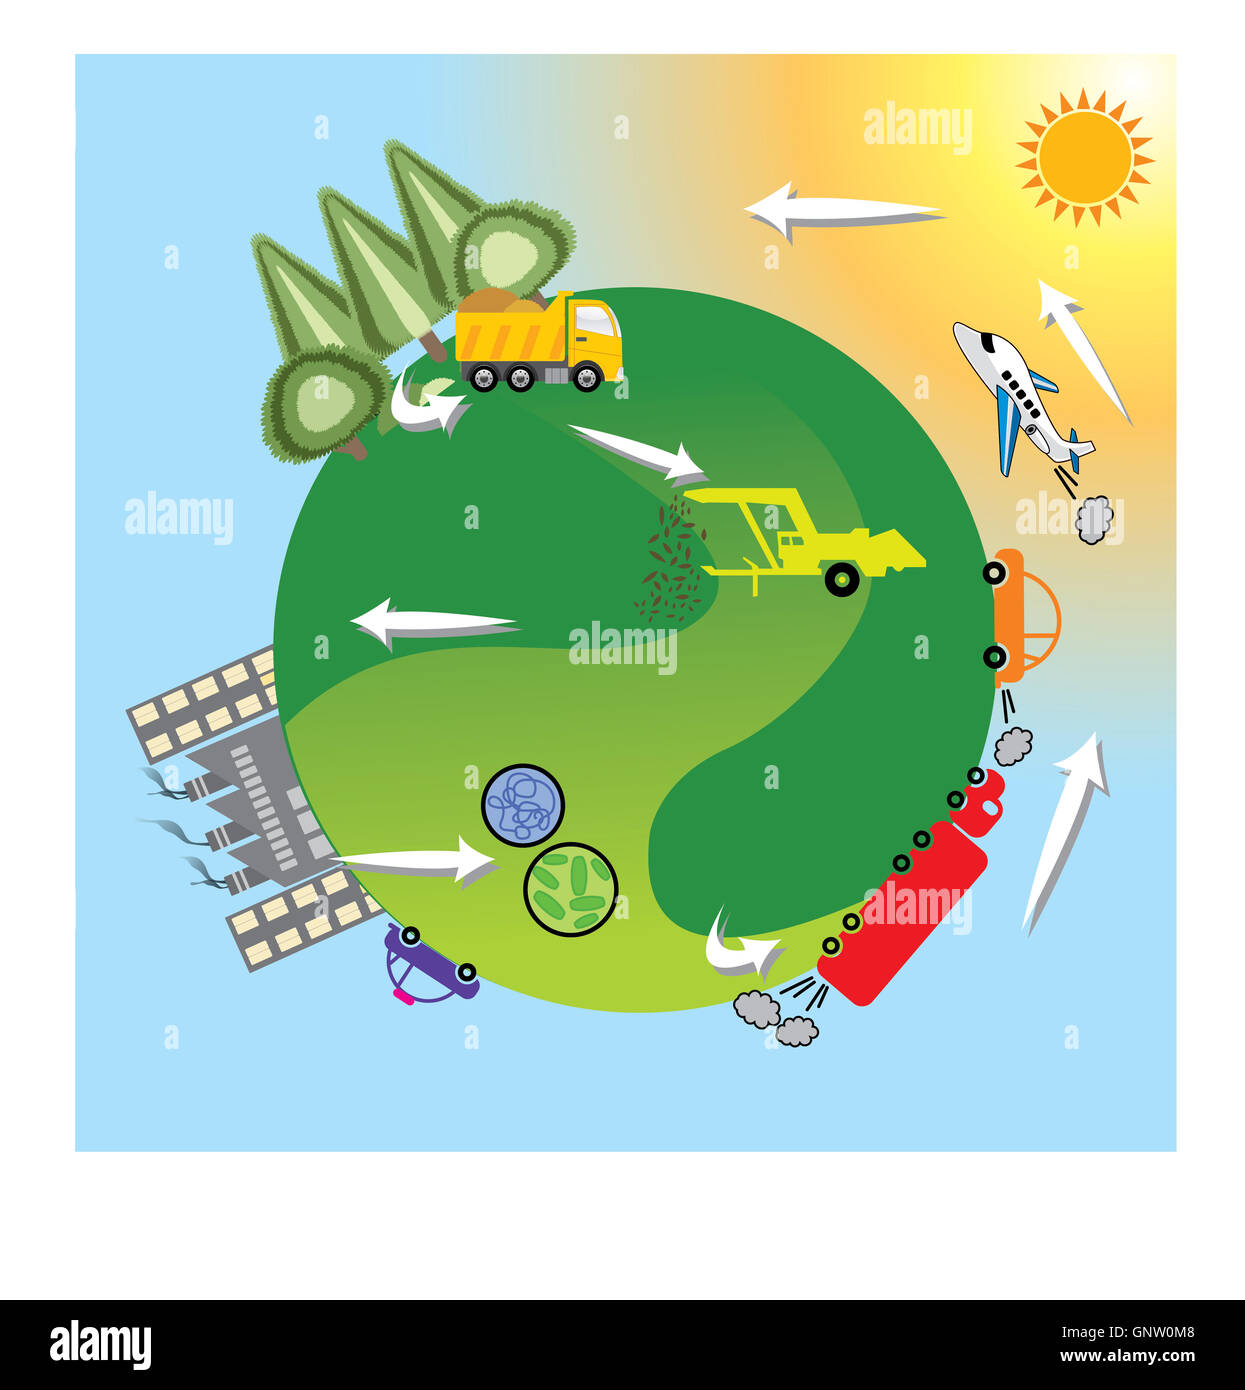 Renewable energy for Earth. Solar Energy, Biomass Energy, Green Energy, Clean Energy Stock Photo